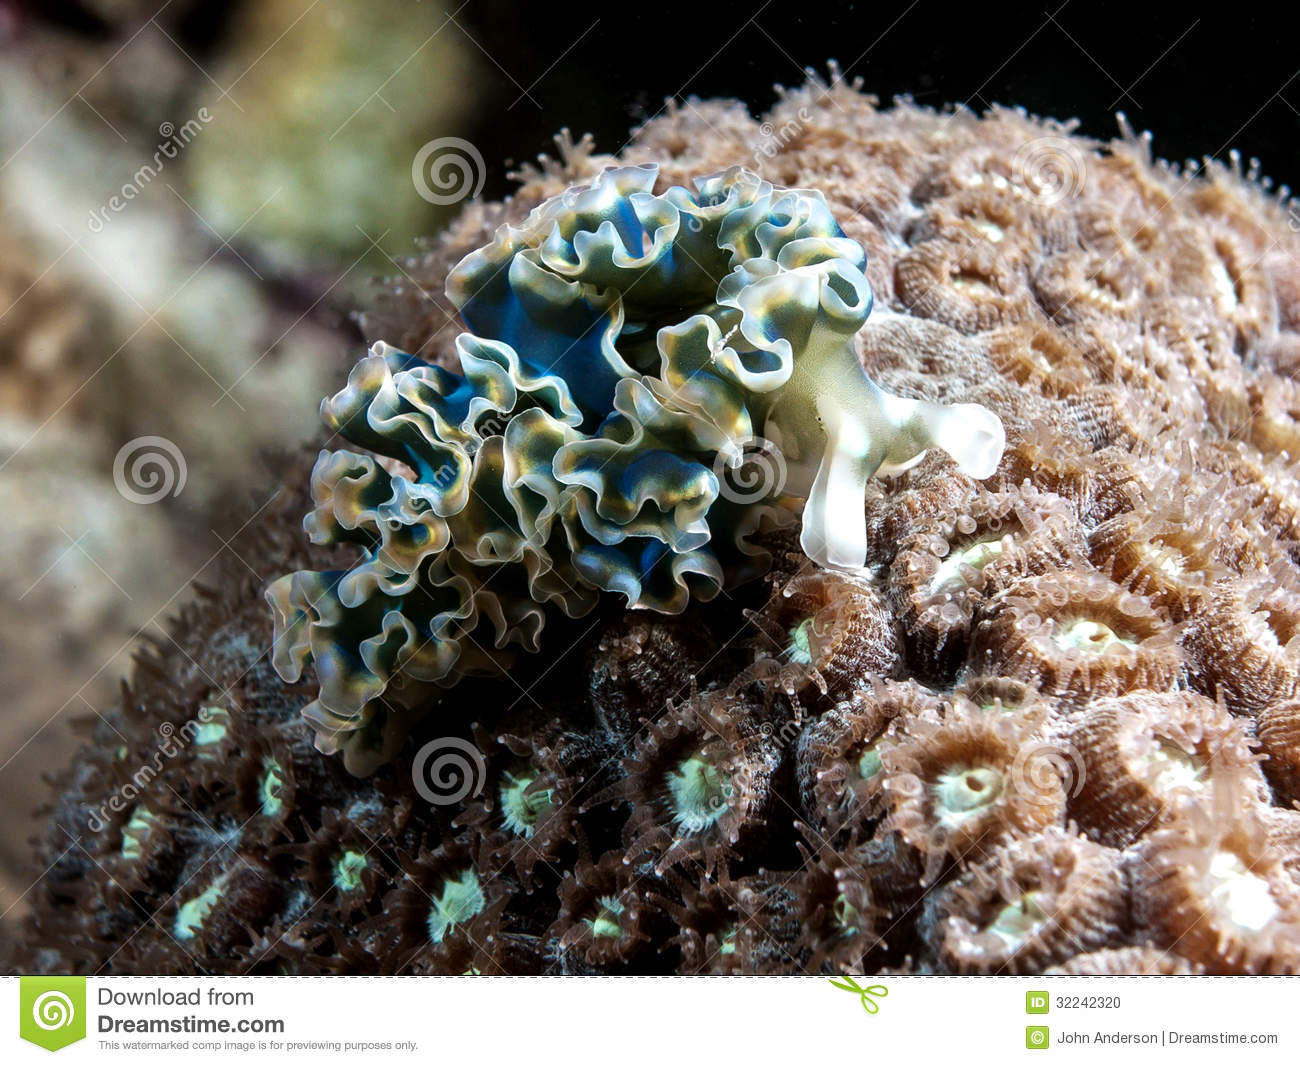 Slug Is A Large And Colorful Species Of Sea Slug A Marine Gastropod